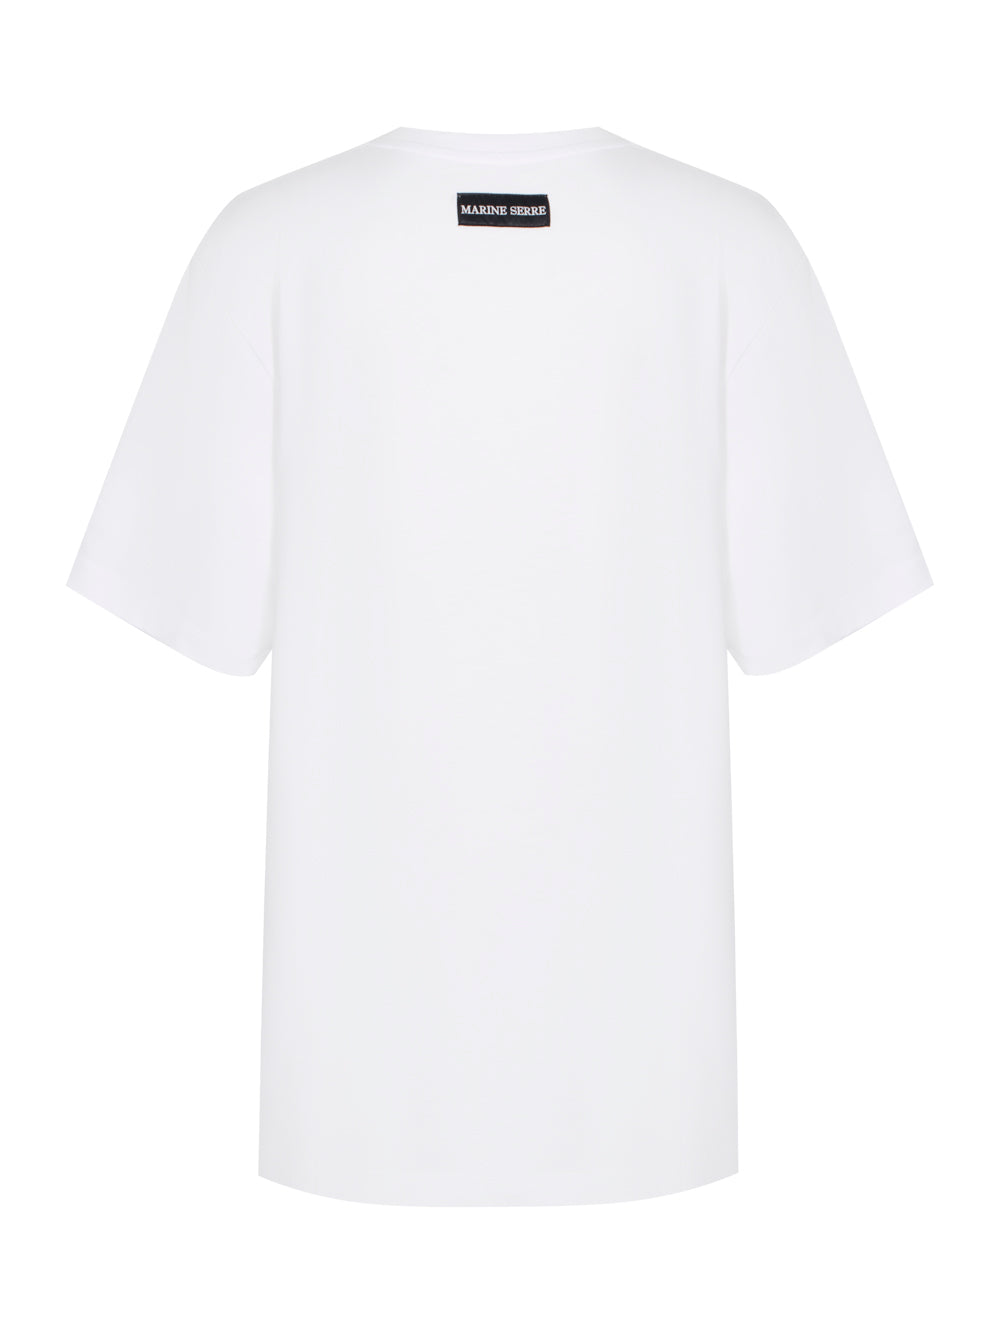 Organic Cotton Jersey Plain T-Shirt (White)